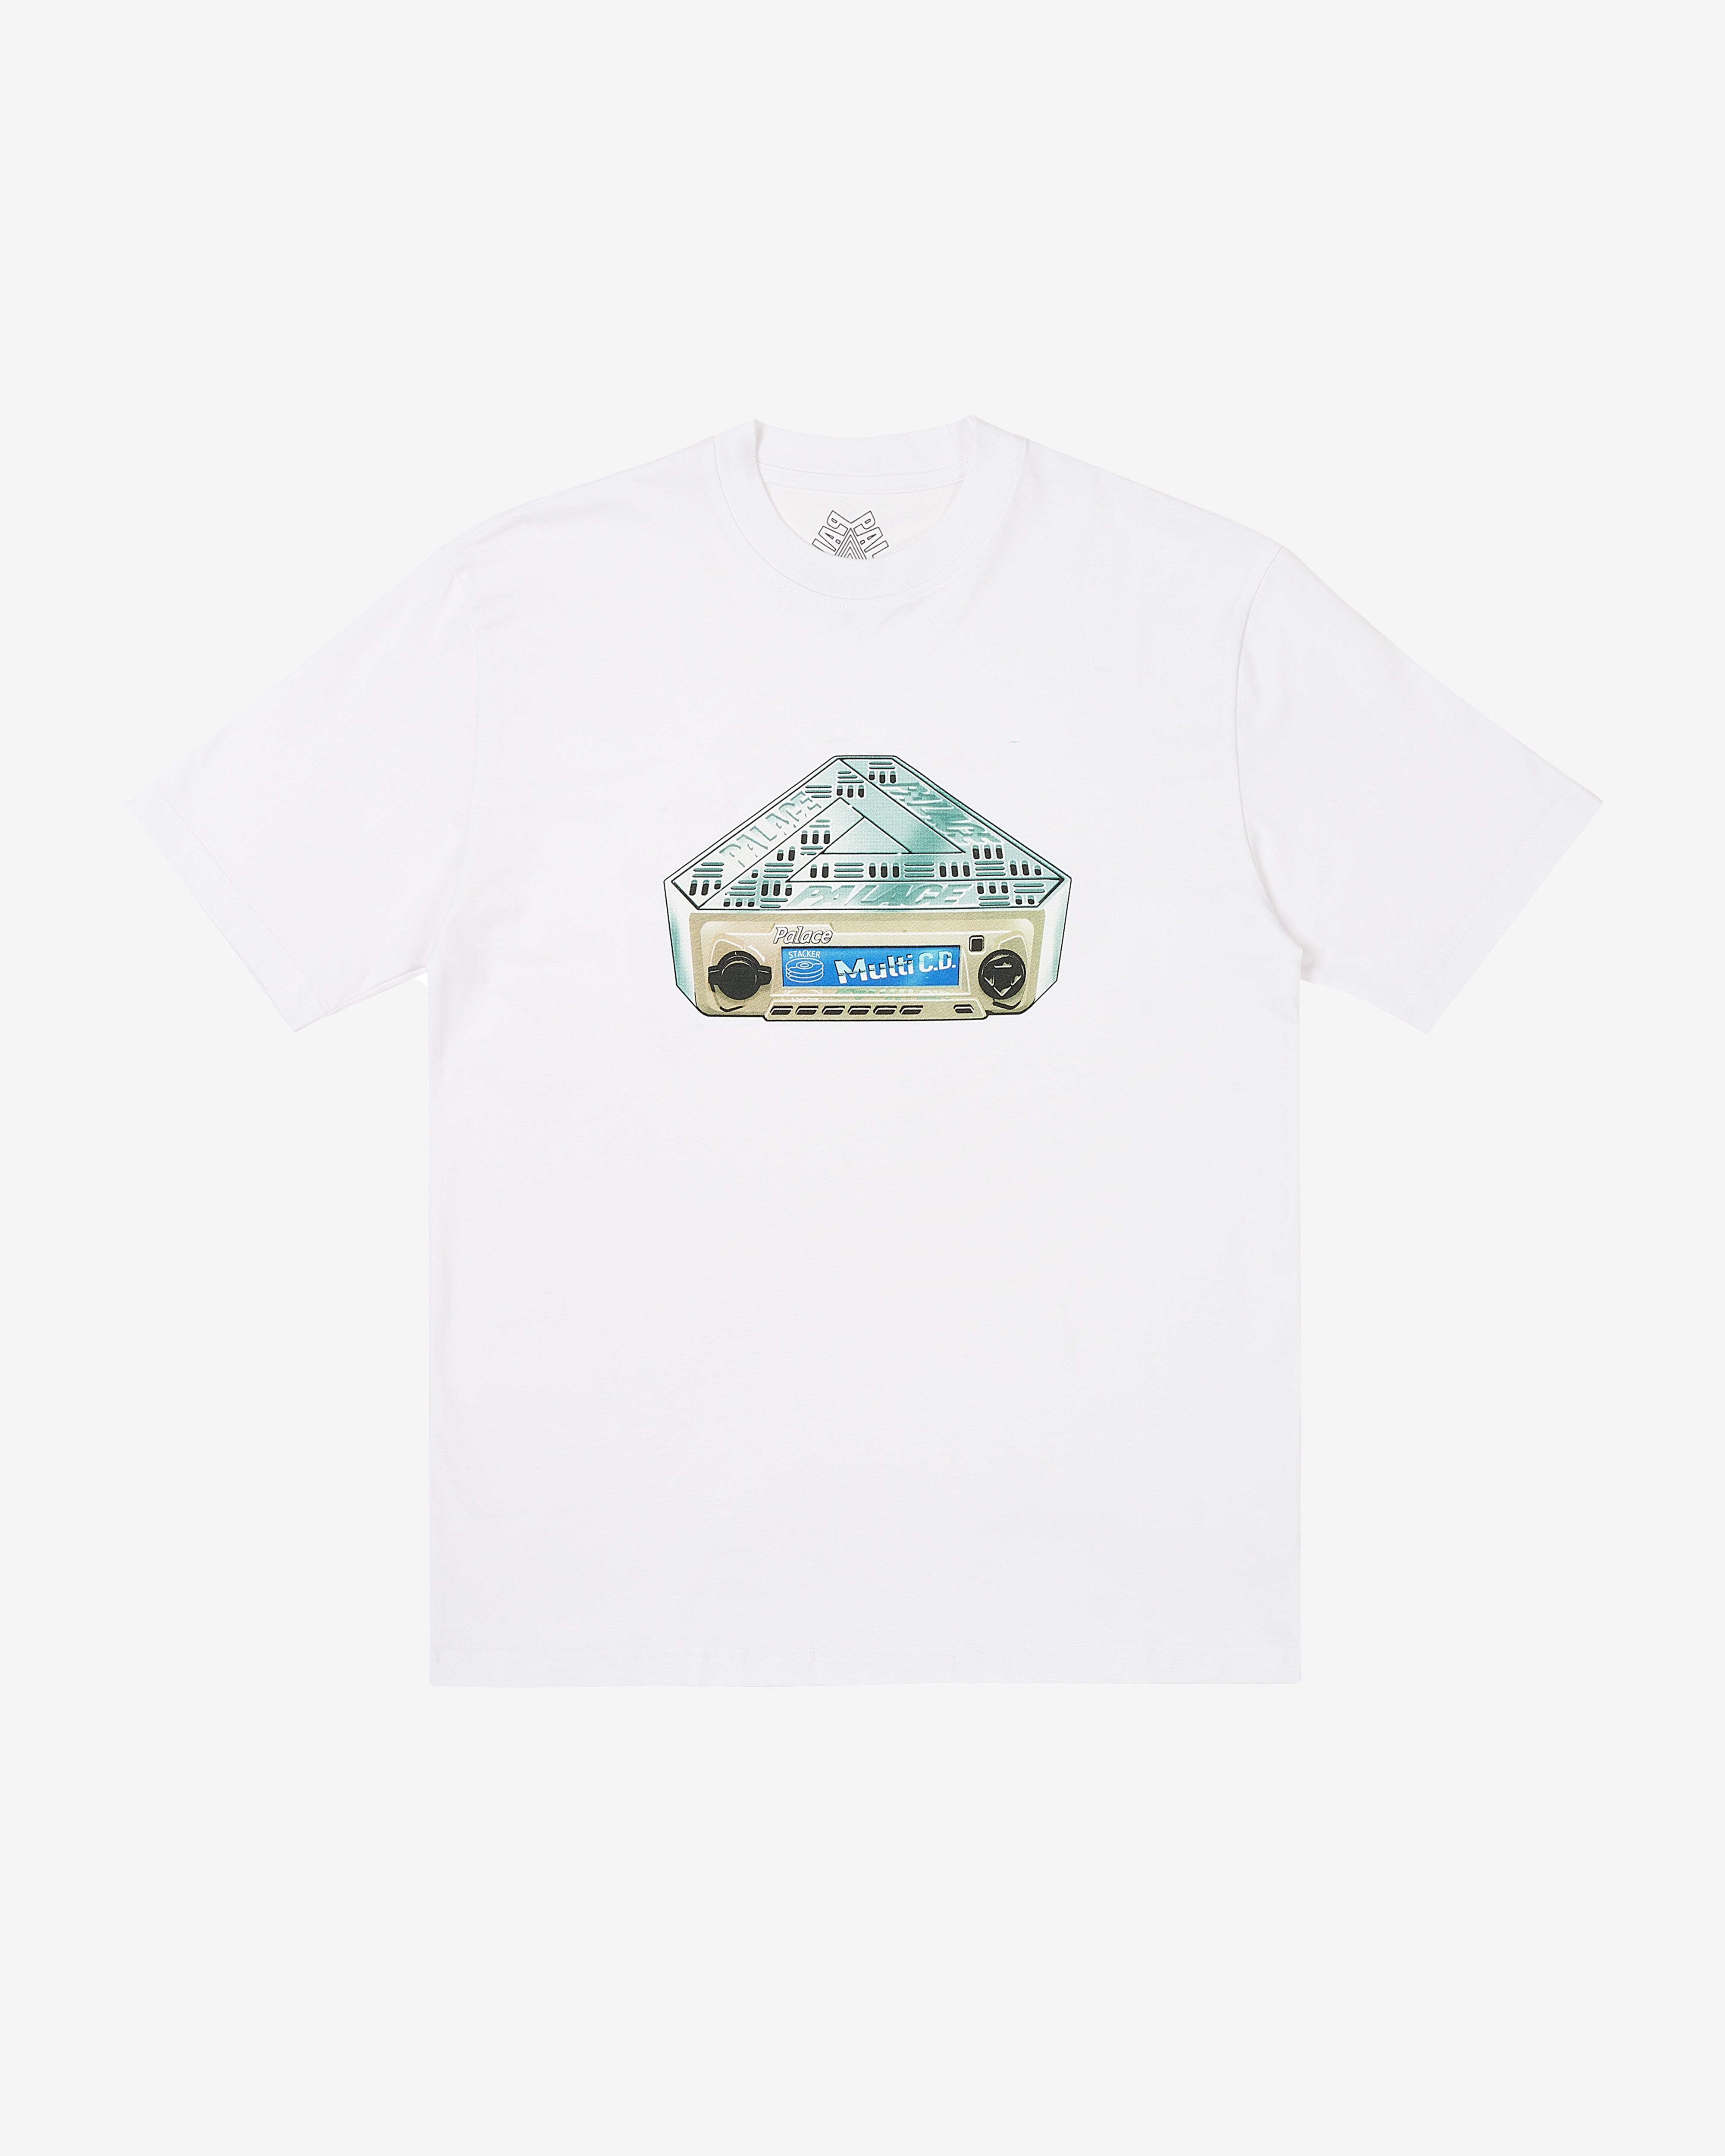 Palace - Men's 4:20 Am T-Shirt - (White)